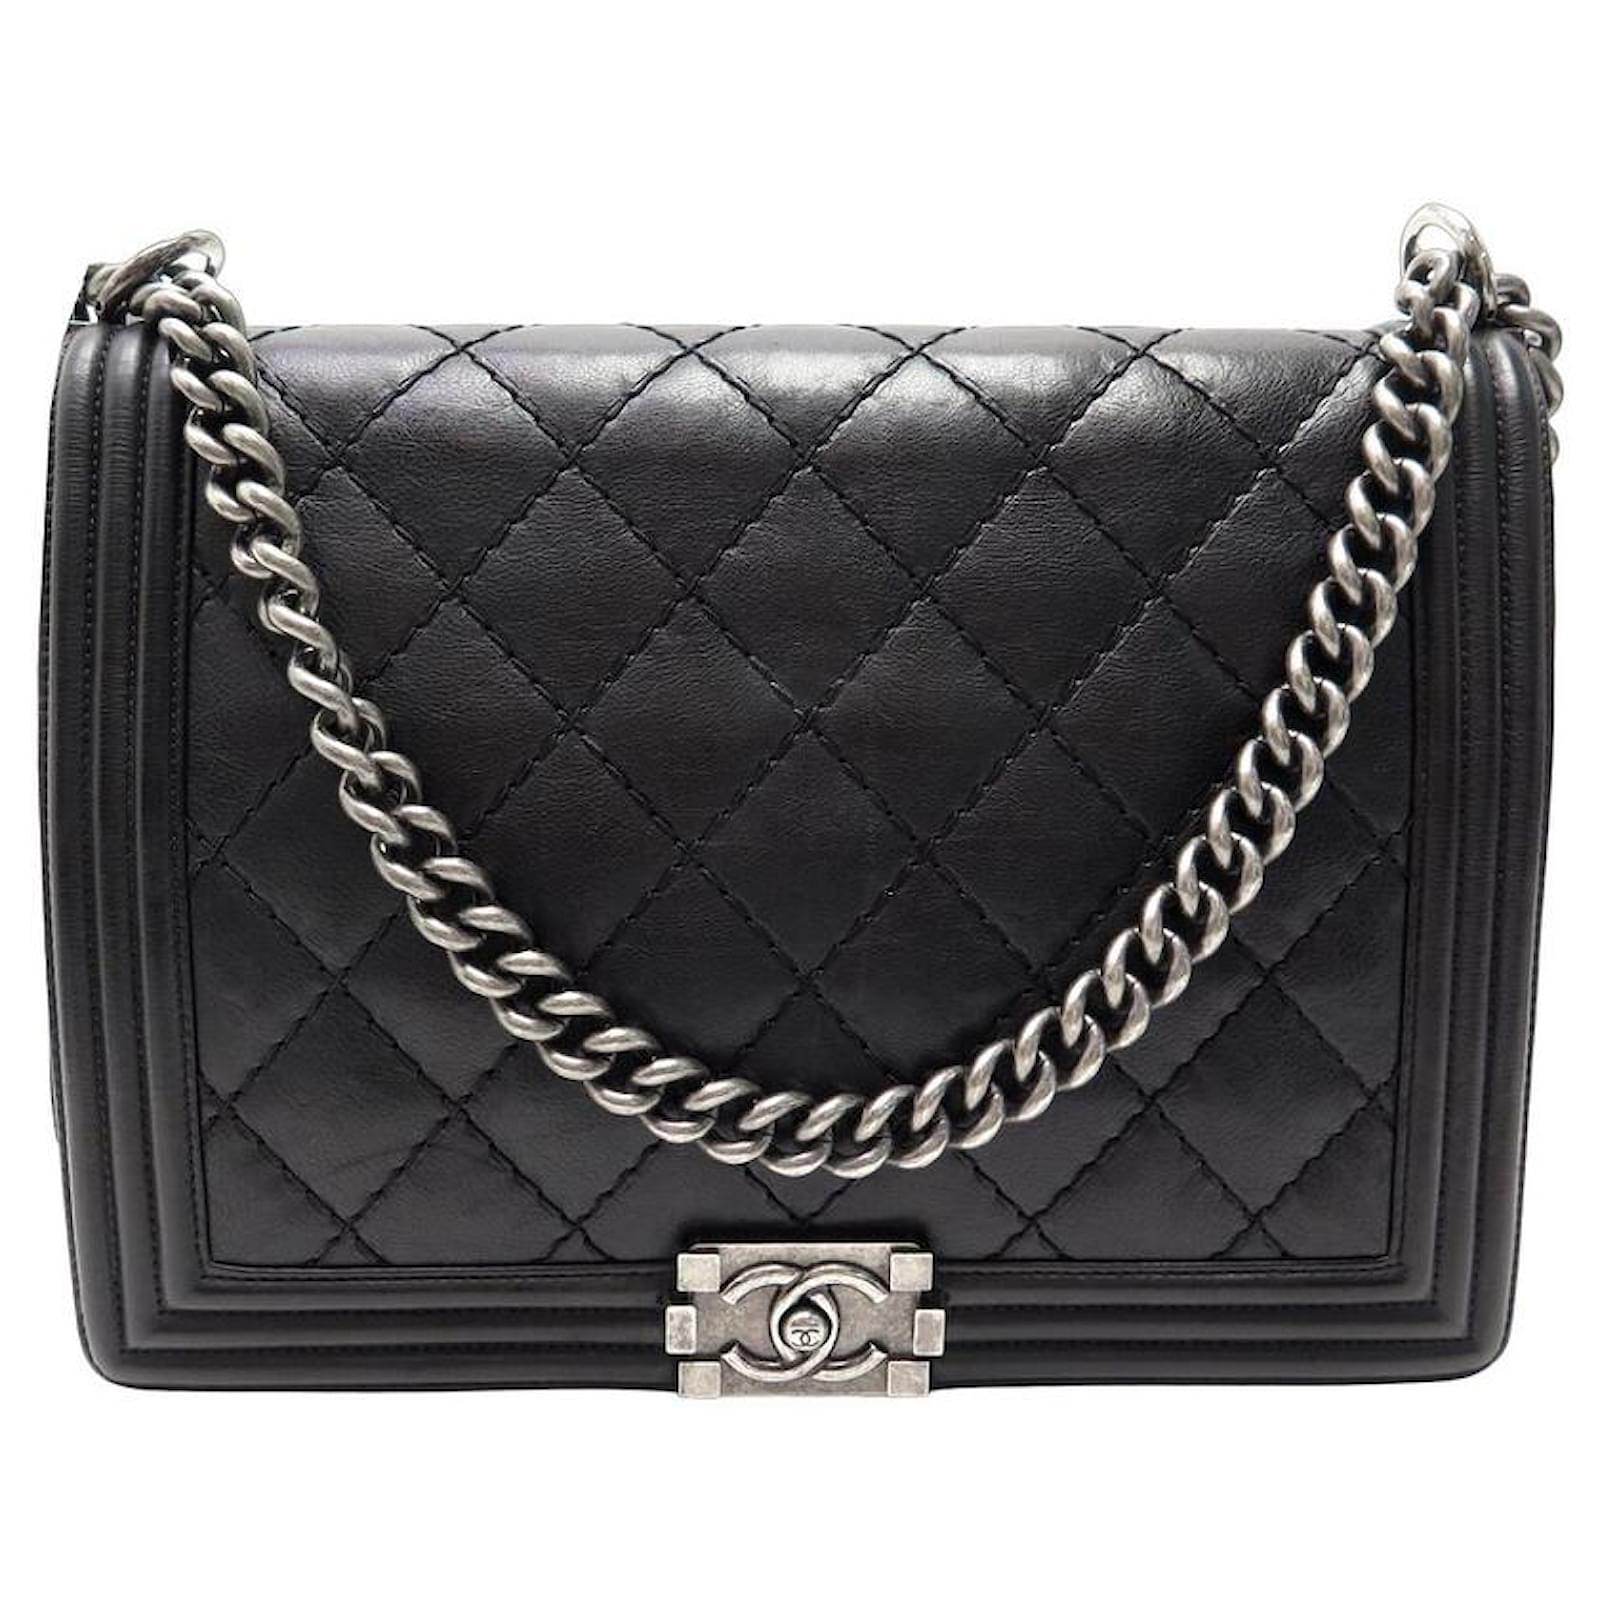 Handbags Chanel Chanel Boy Maxi Jumbo Handbag Black Quilted Leather Crossbody Hand Bag